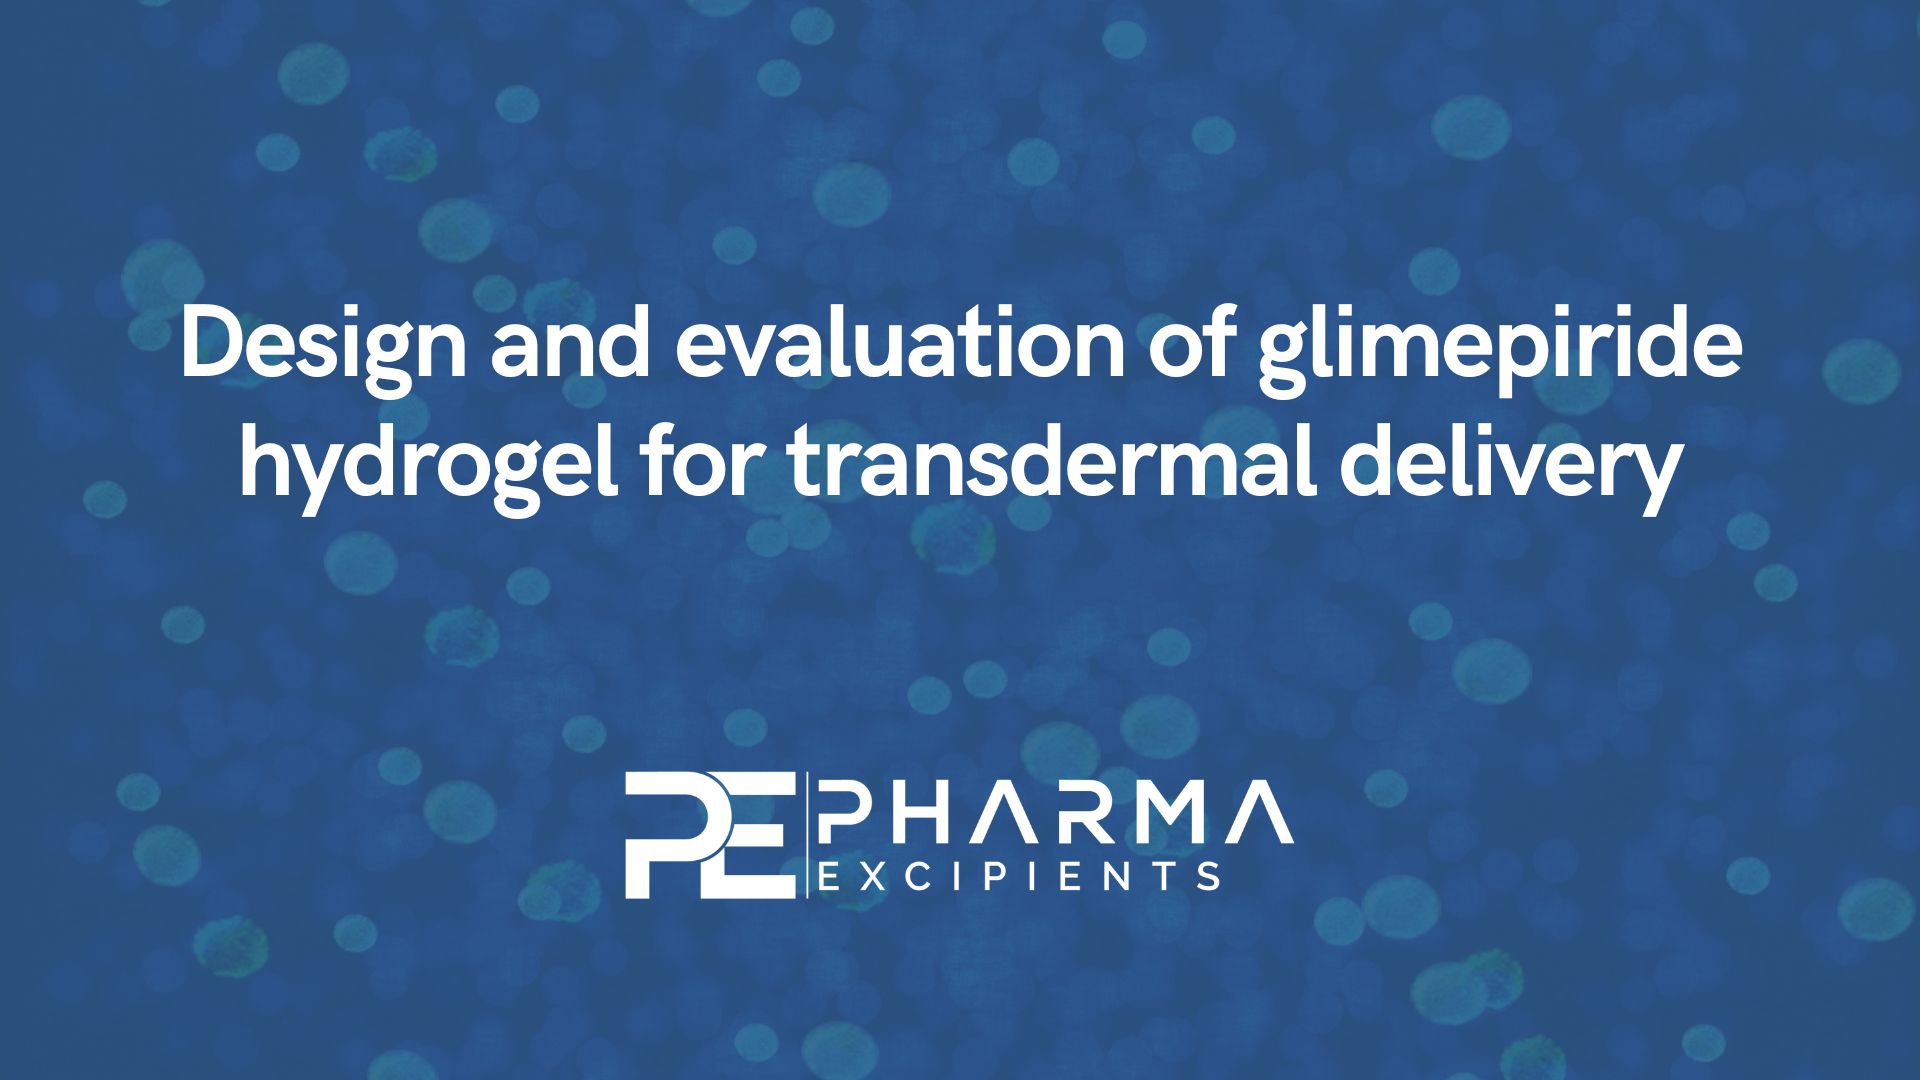 Design and evaluation of glimepiride hydrogel for transdermal delivery